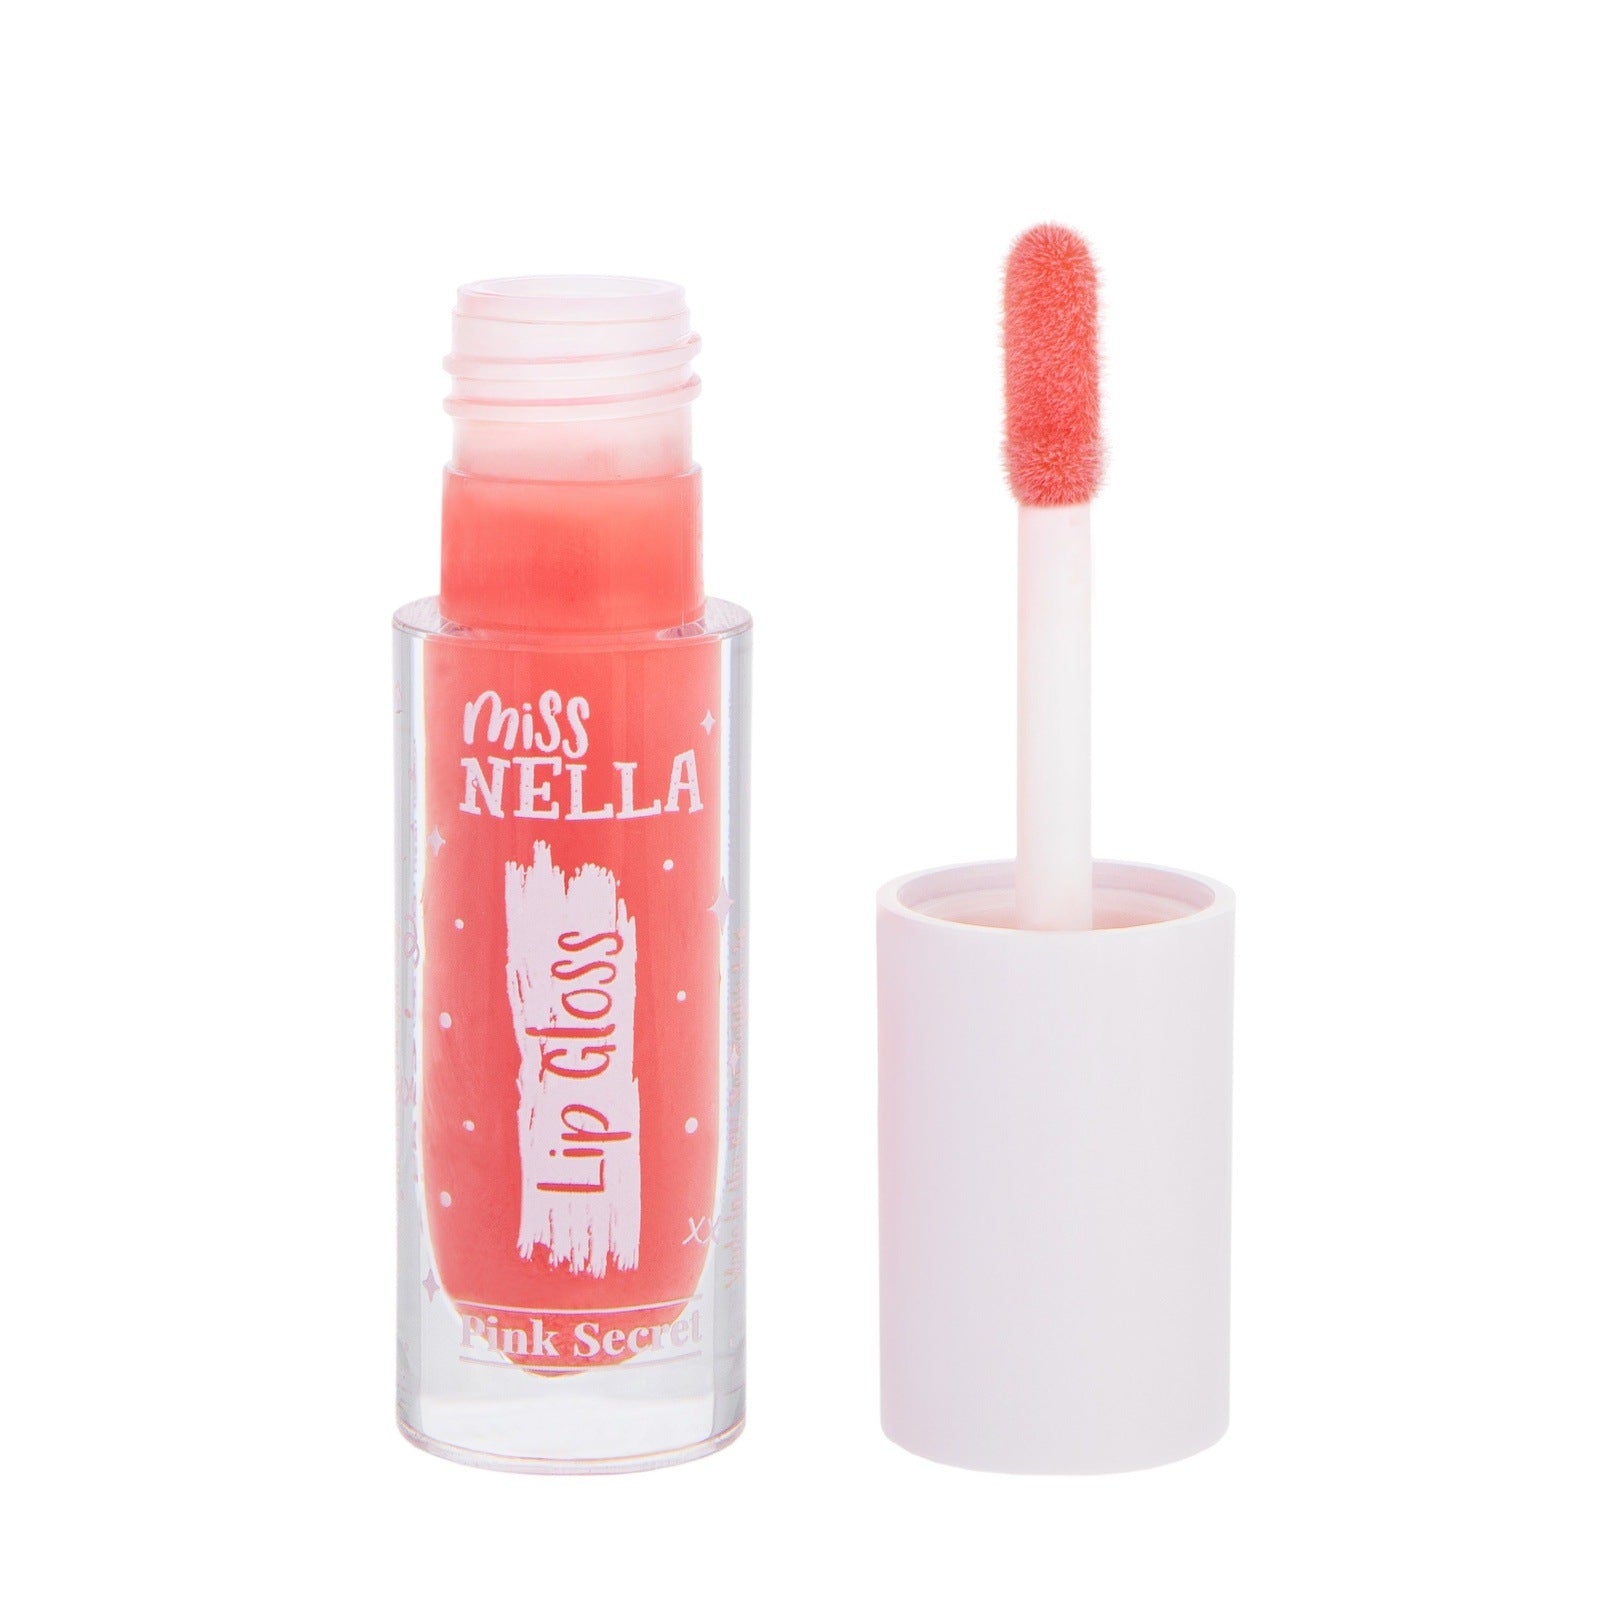 Pink Secret Lip gloss